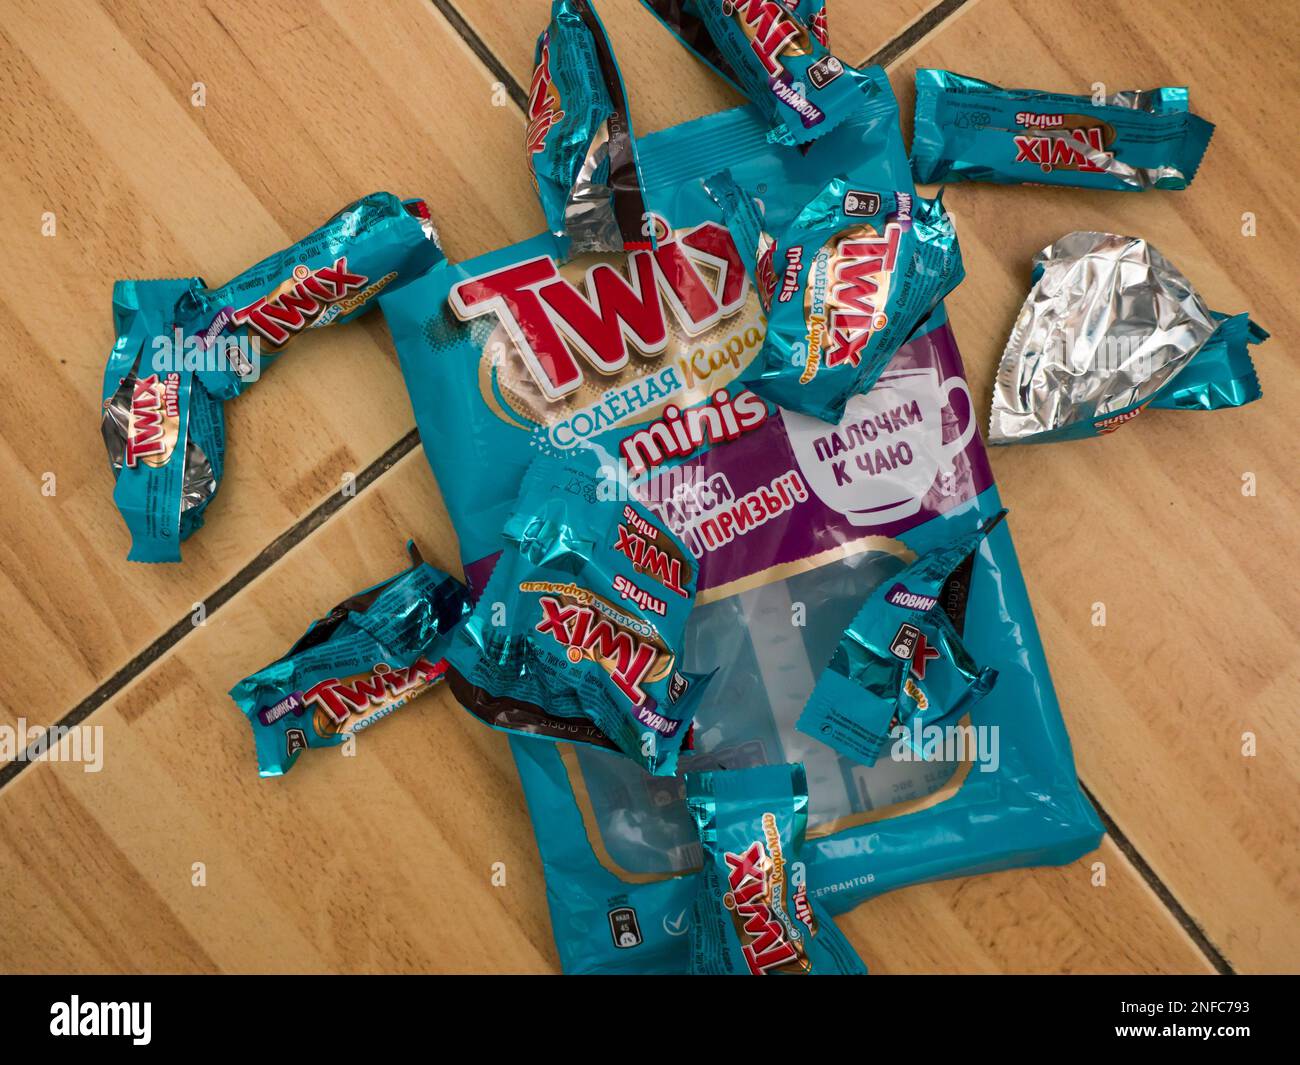 Twix minis cookie bars. Twix is a chocolate bar made by Mars, Inc. Stock Photo